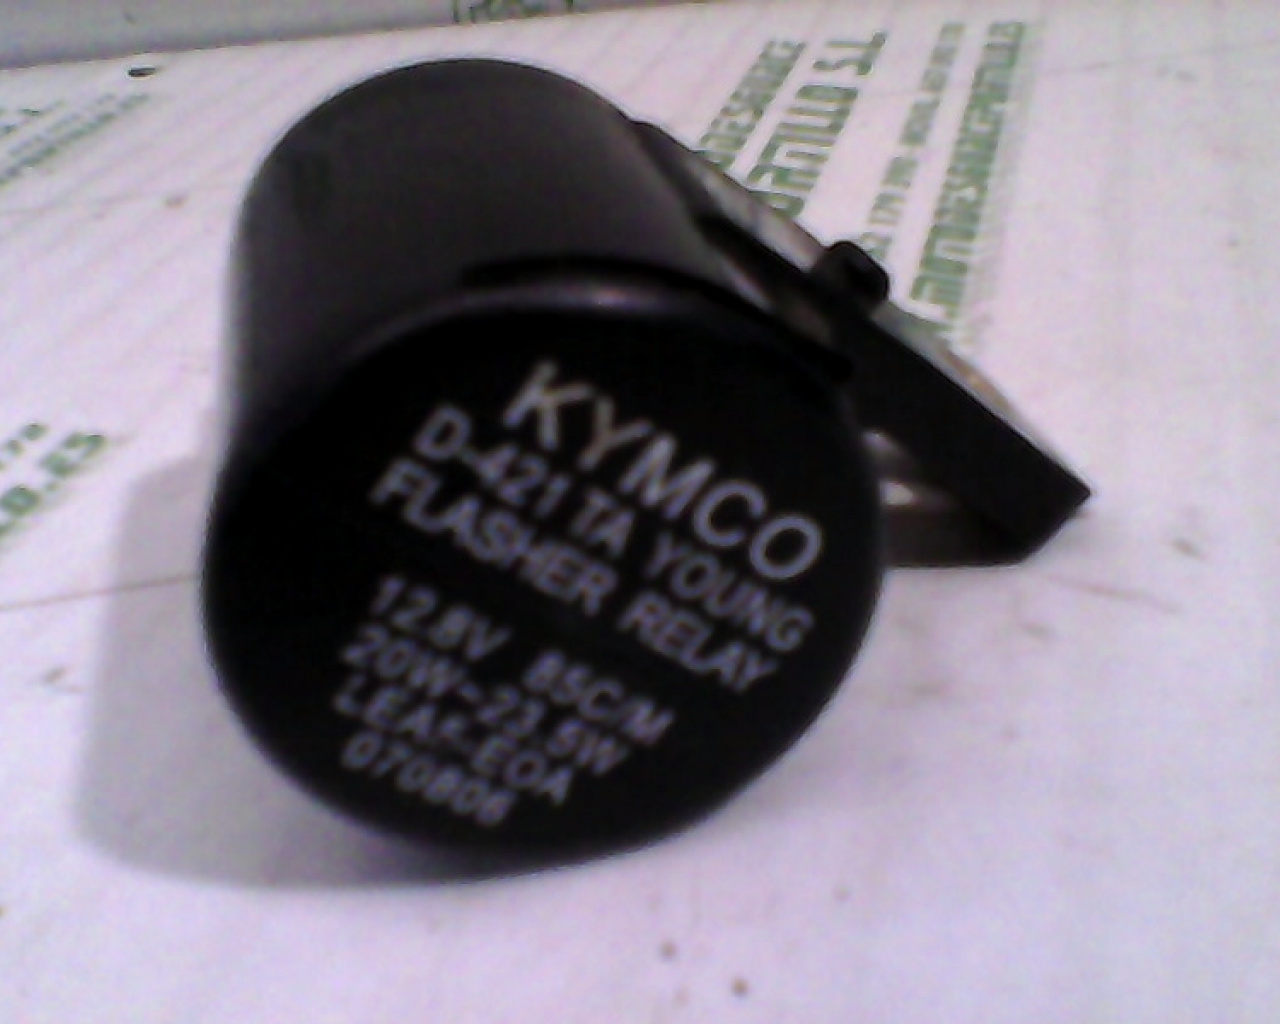 Rele de intermitencia Kymco Yager 125 (2008-2010)